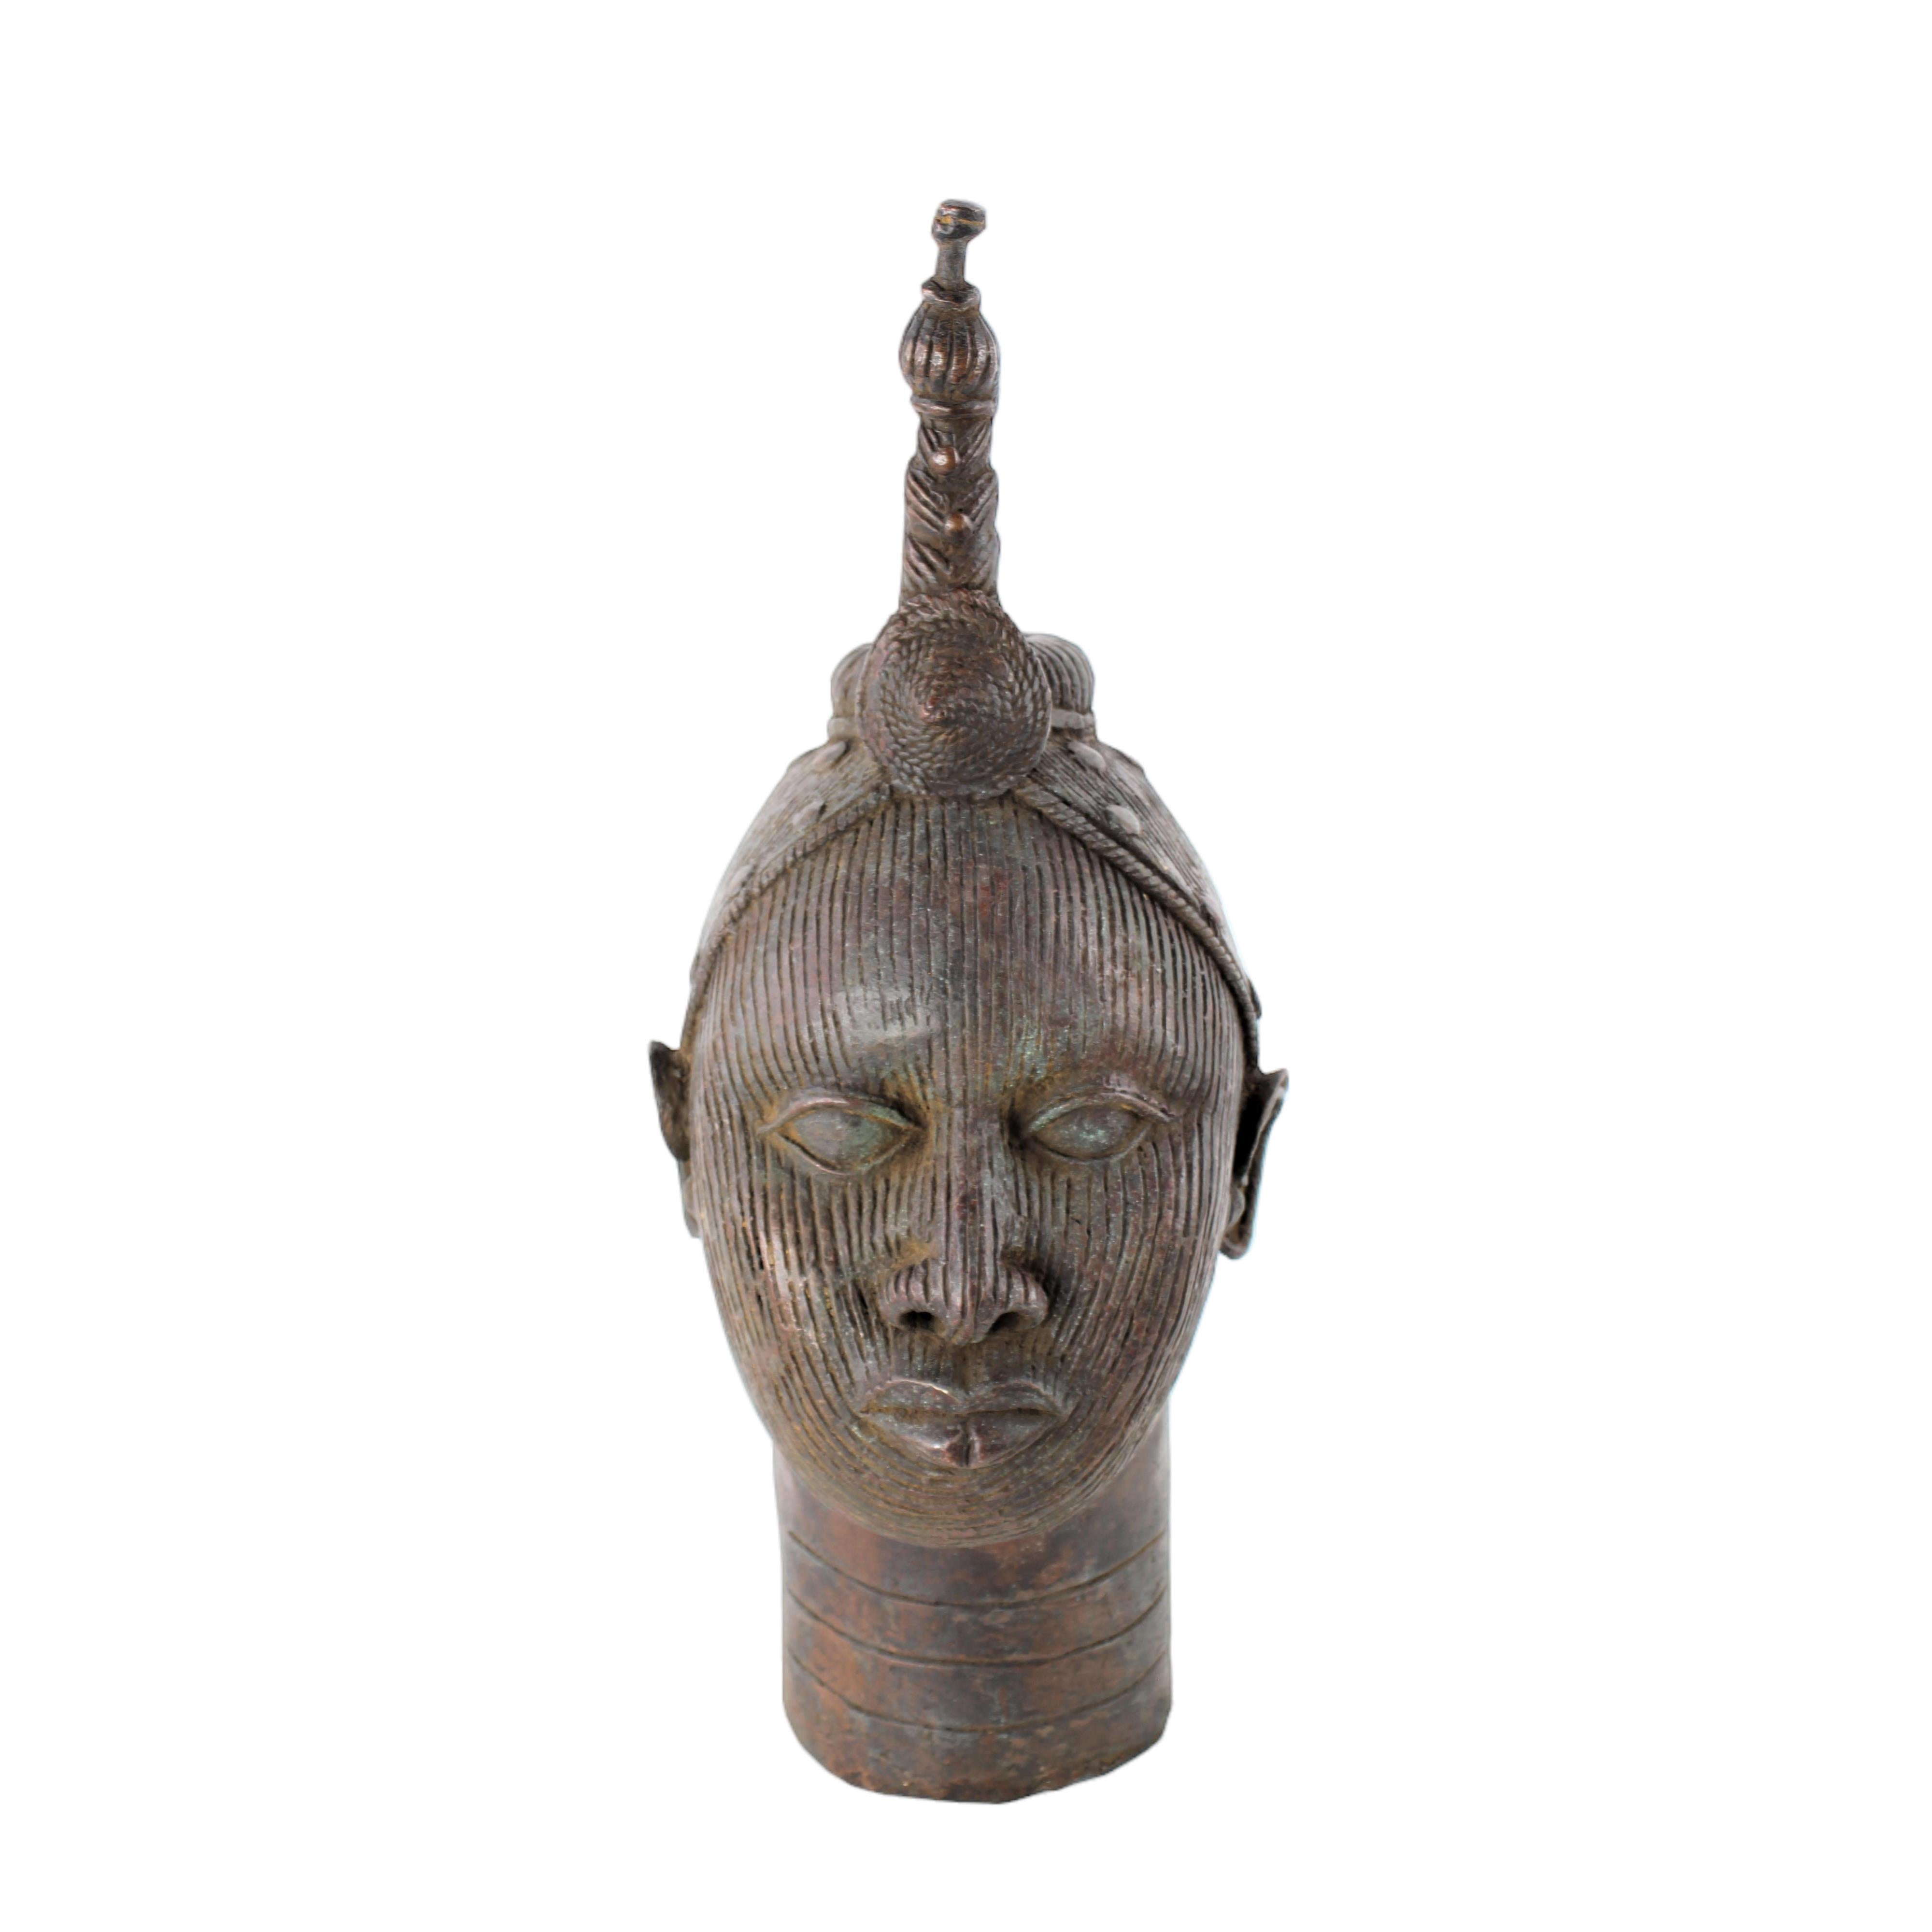 Yoruba Tribe Heads ~15.0" Tall - Heads